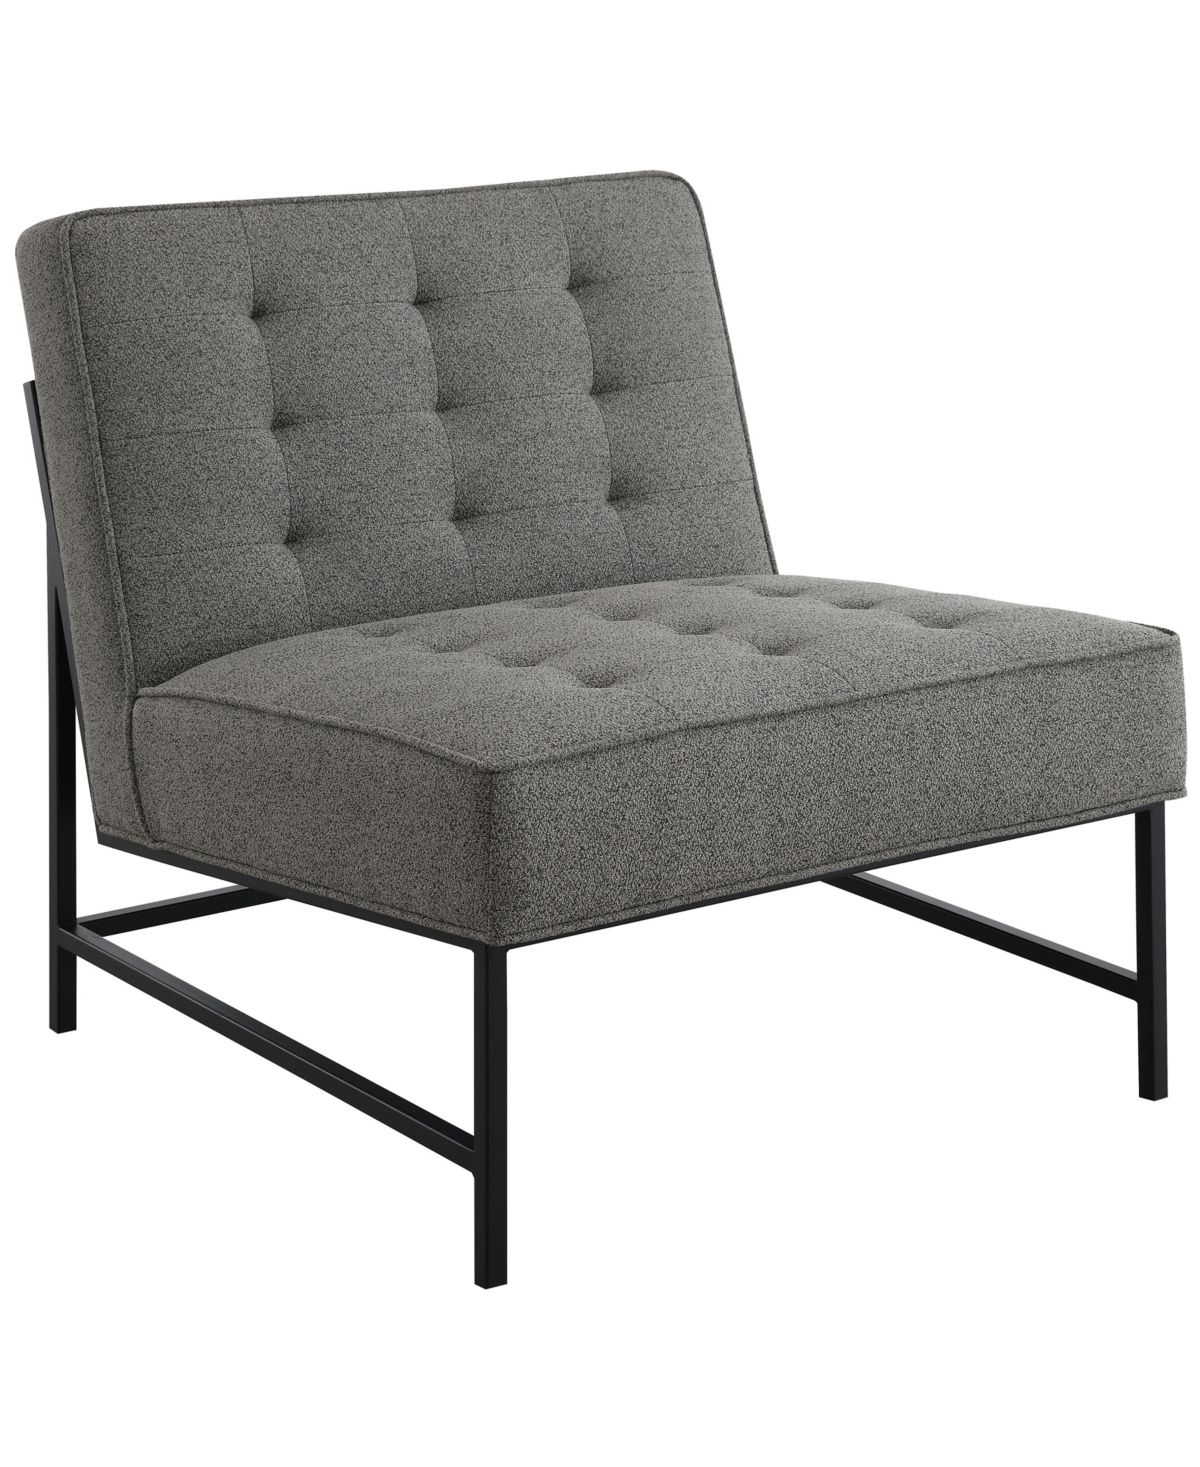 Abbyson Living Astor 32.5 Tufted Fabric Chair In Dark Gray